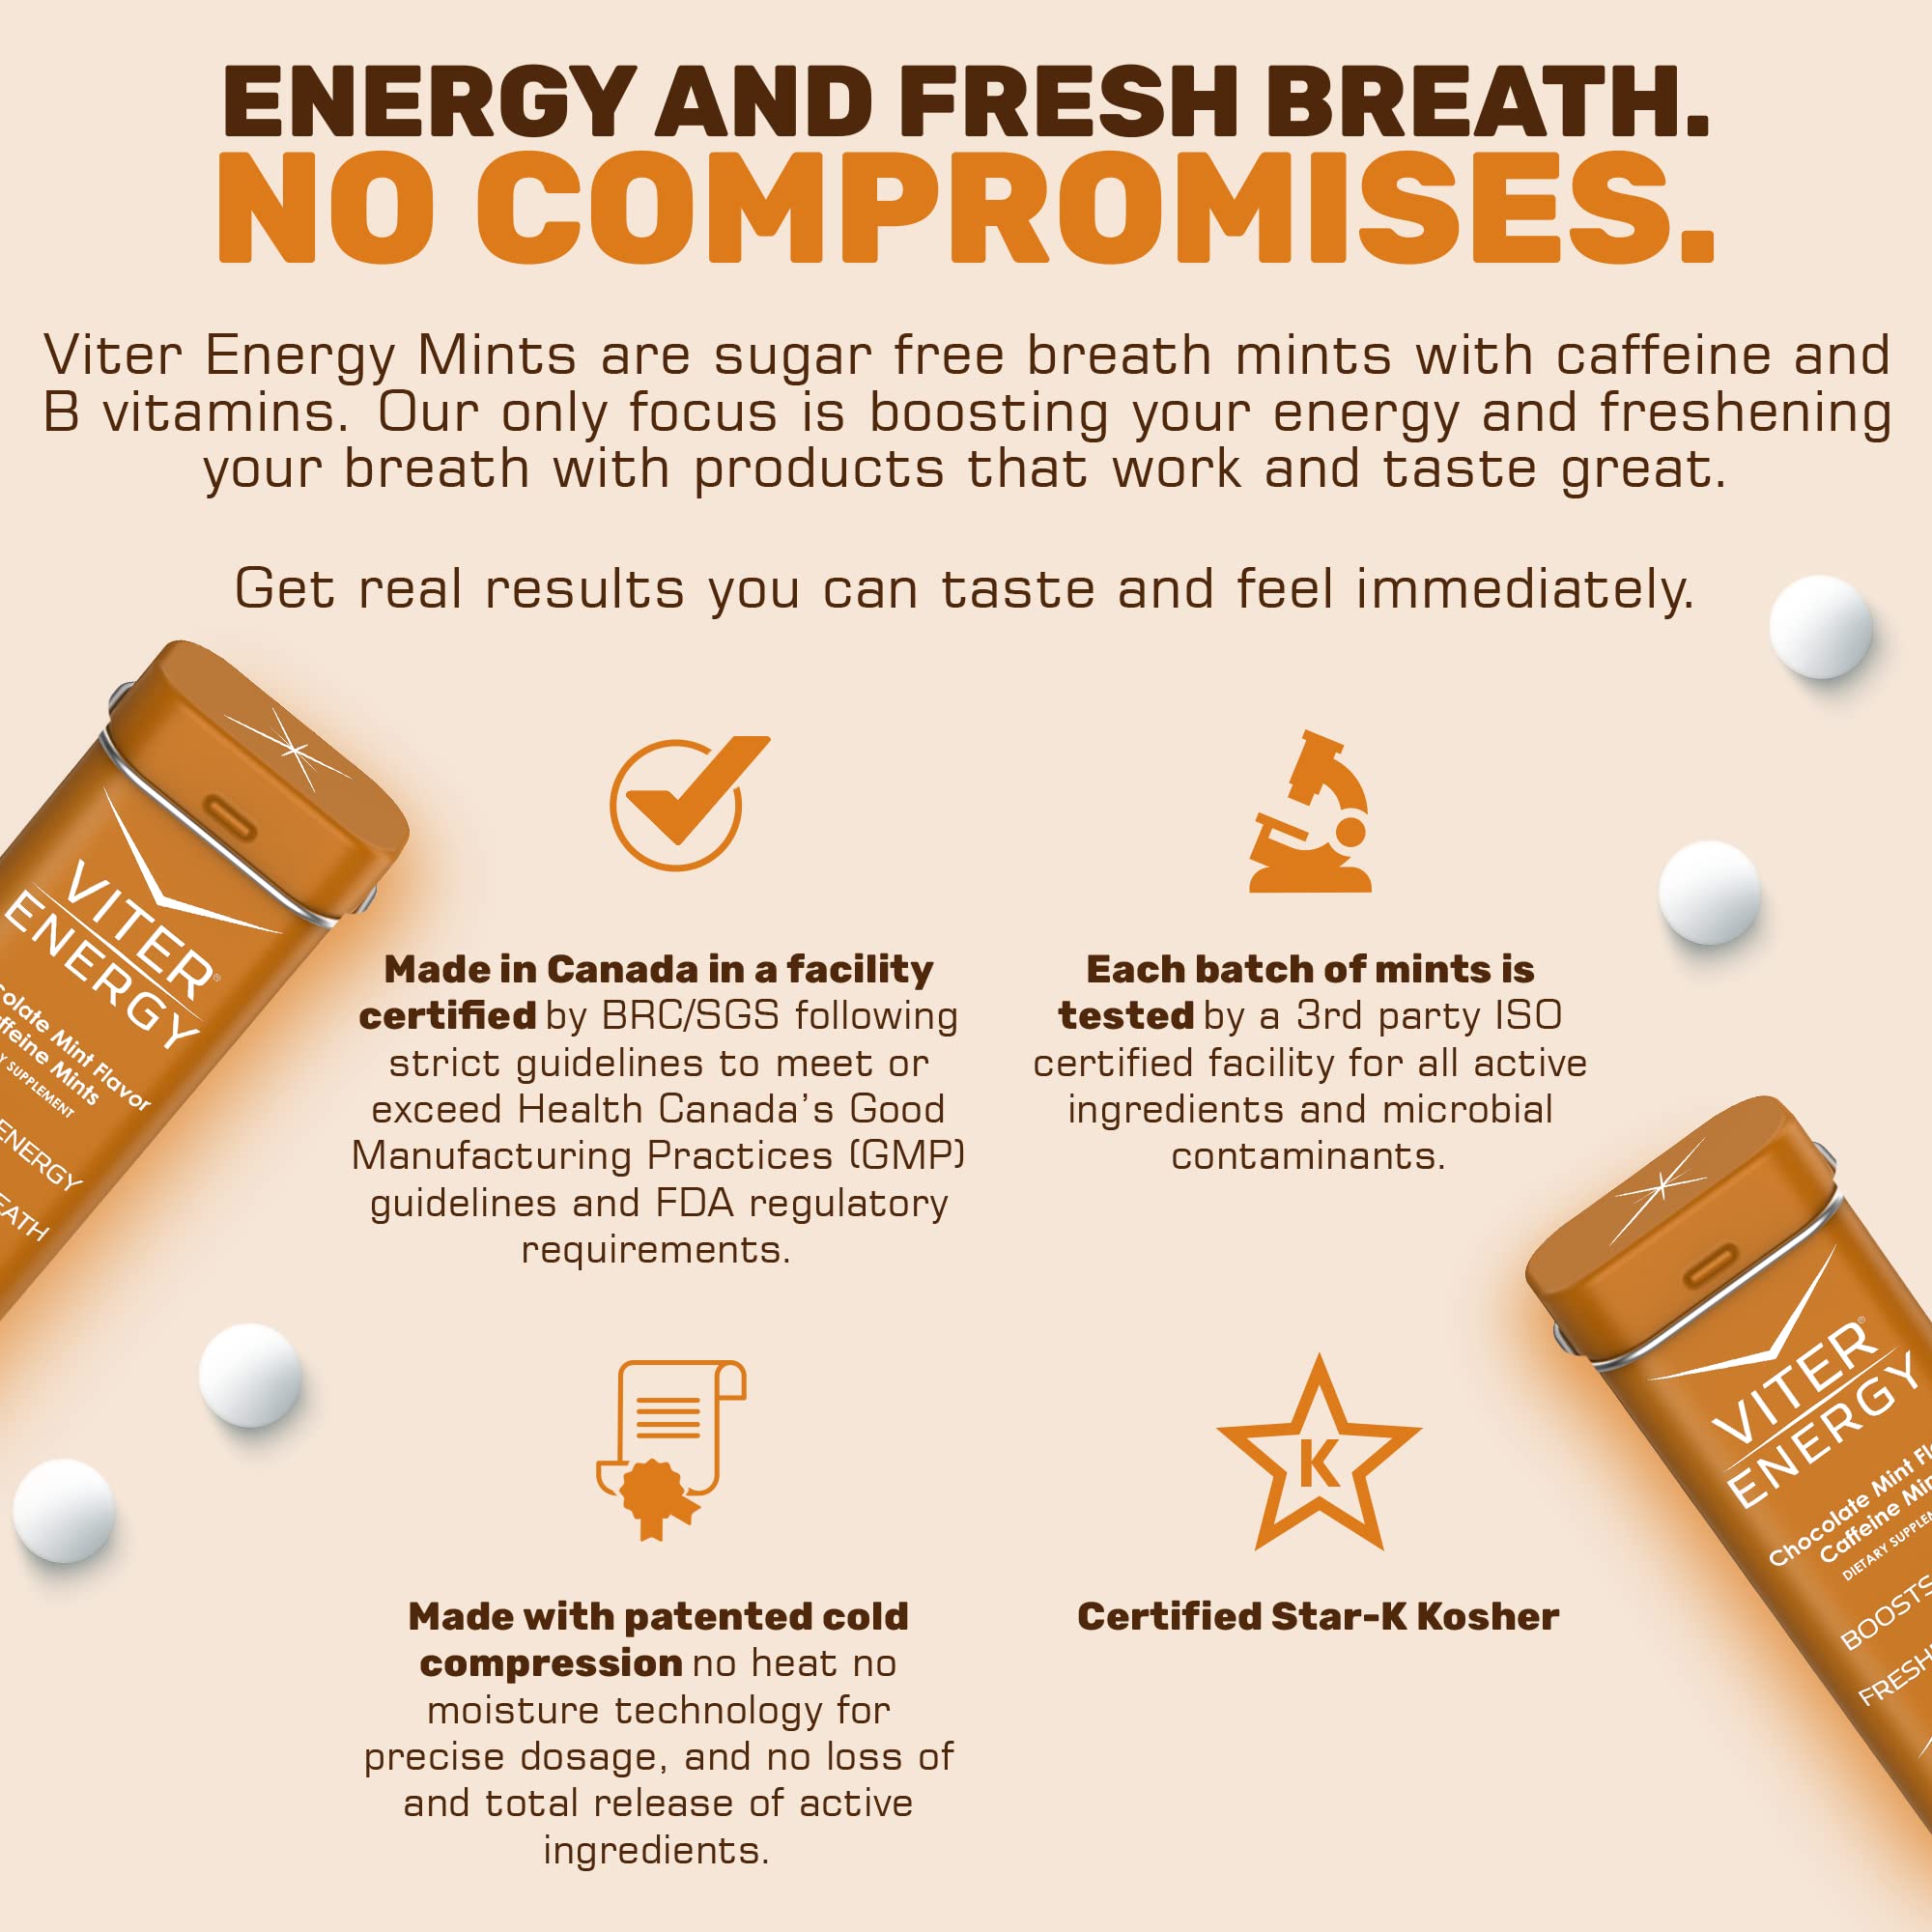 Viter Energy Original Caffeine Mints Chocolate Mint Flavor 6 Pack and 1/2 Pound Bulk Bag Bundle - 40mg Caffeine, B Vitamins, Sugar Free, Vegan, Powerful Energy Booster for Focus and Alertness